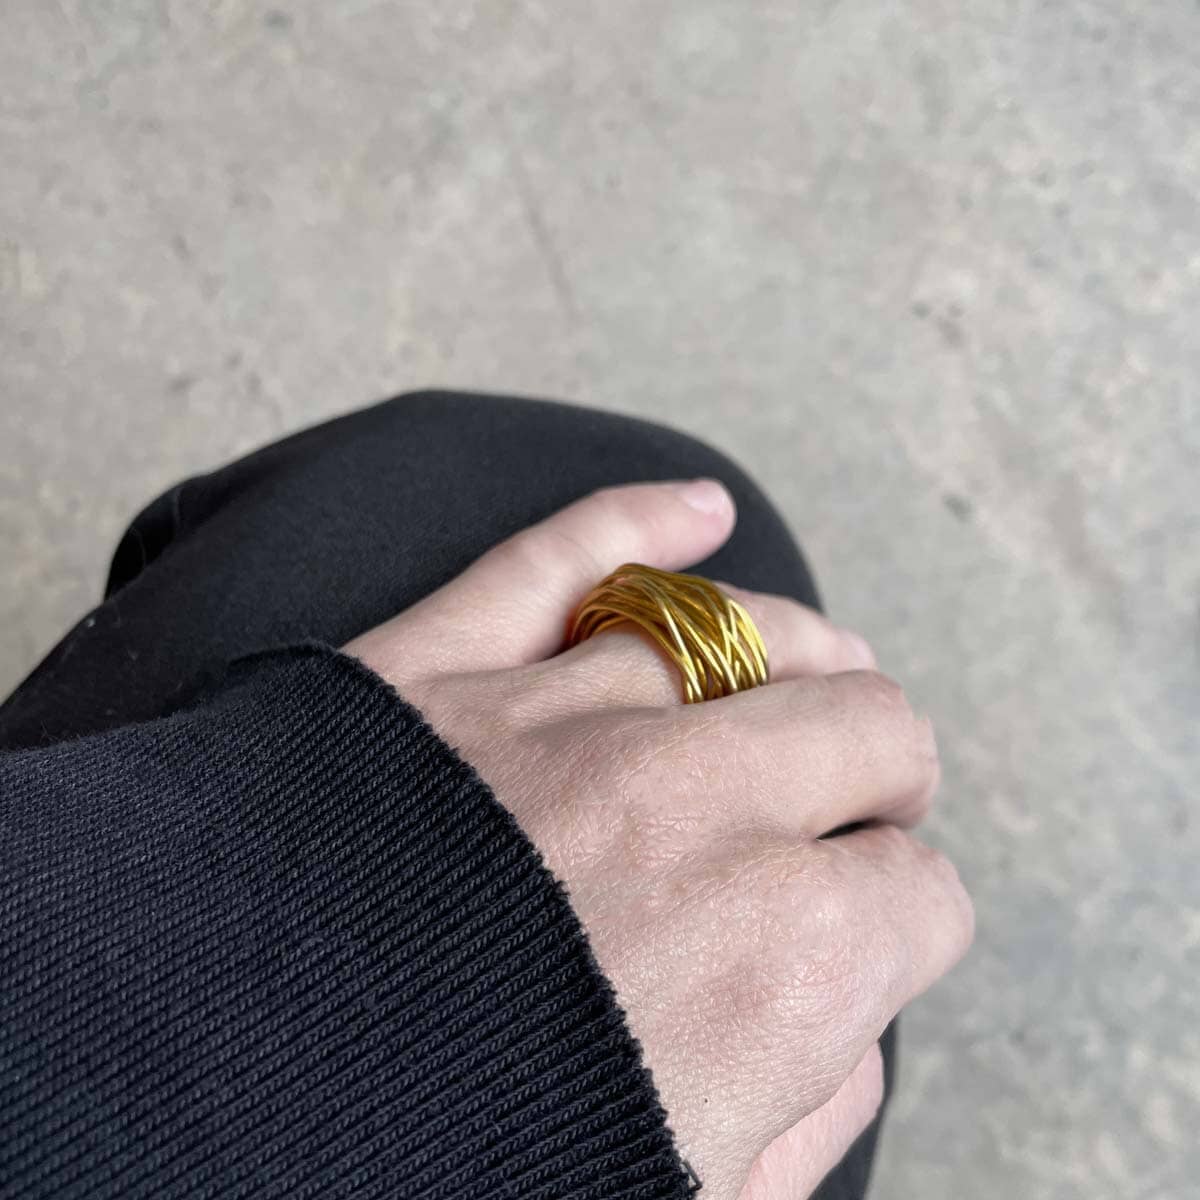 Brass coil ring / טבעת סליל מבראס - studio oh design